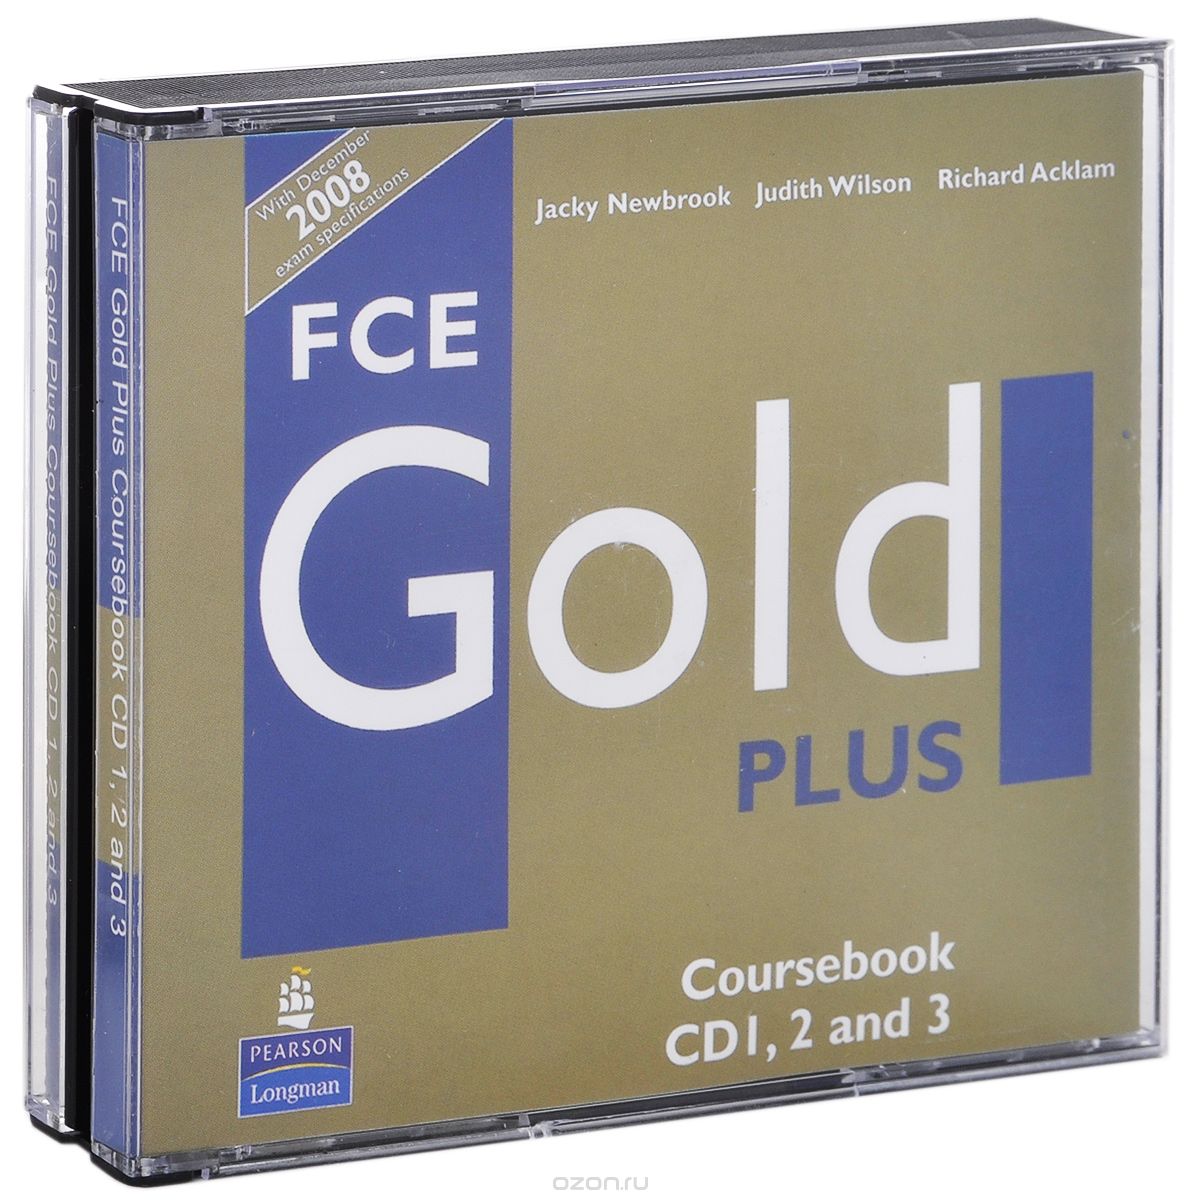 Скачать книгу "FCE Gold Plus: Coursebook (аудиокурс на 3 CD)"